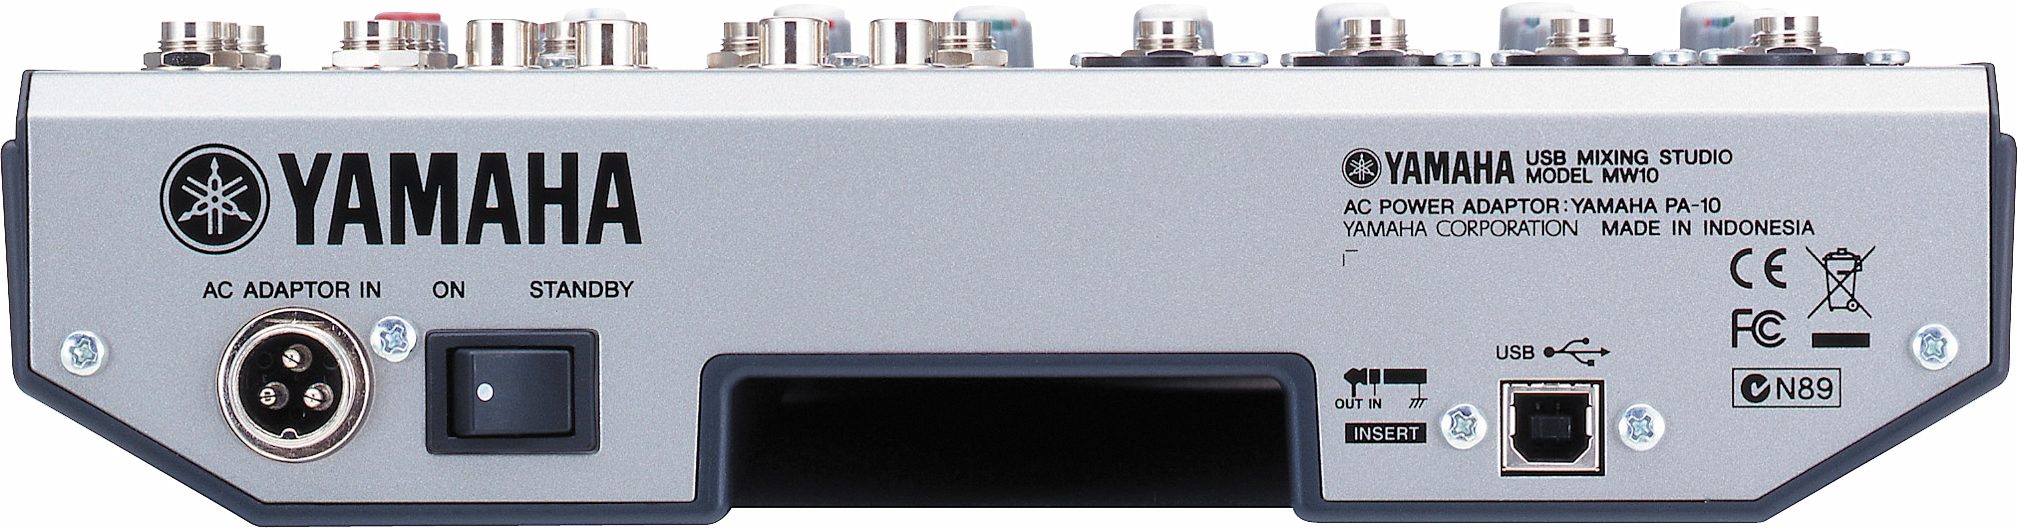 Yamaha MW10 10-Channel USB Mixer | zZounds